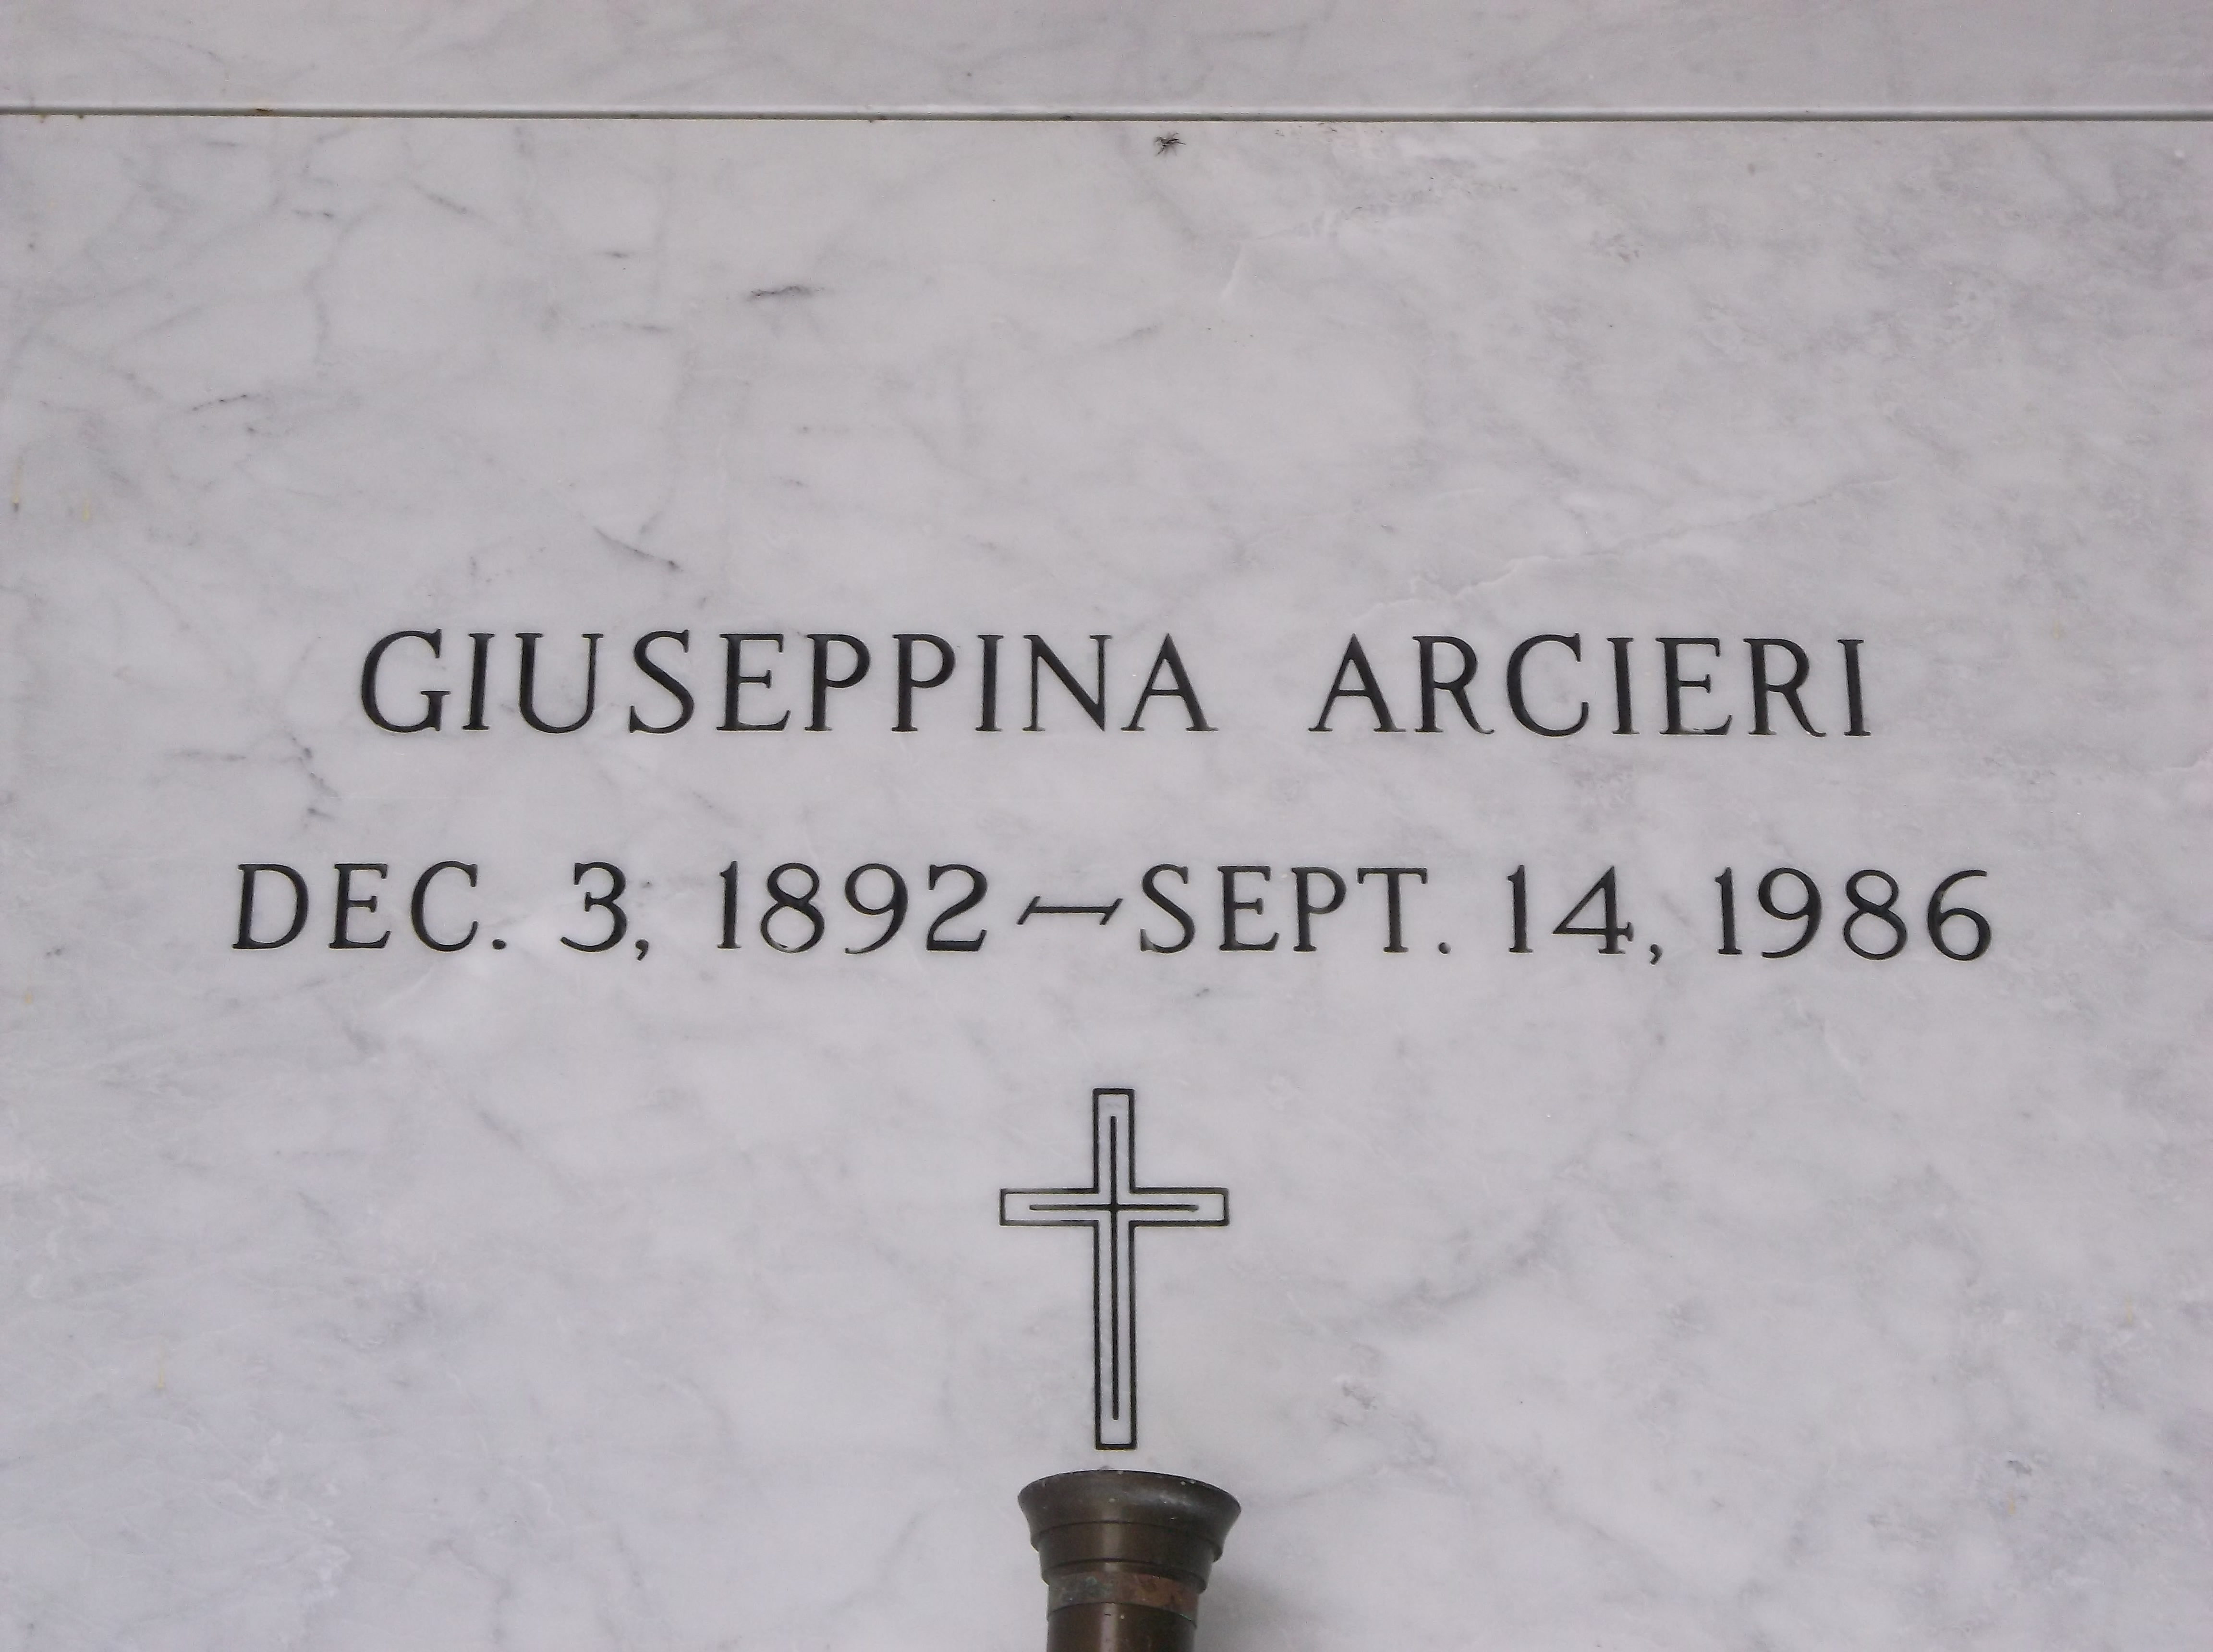 Giuseppina Arcieri